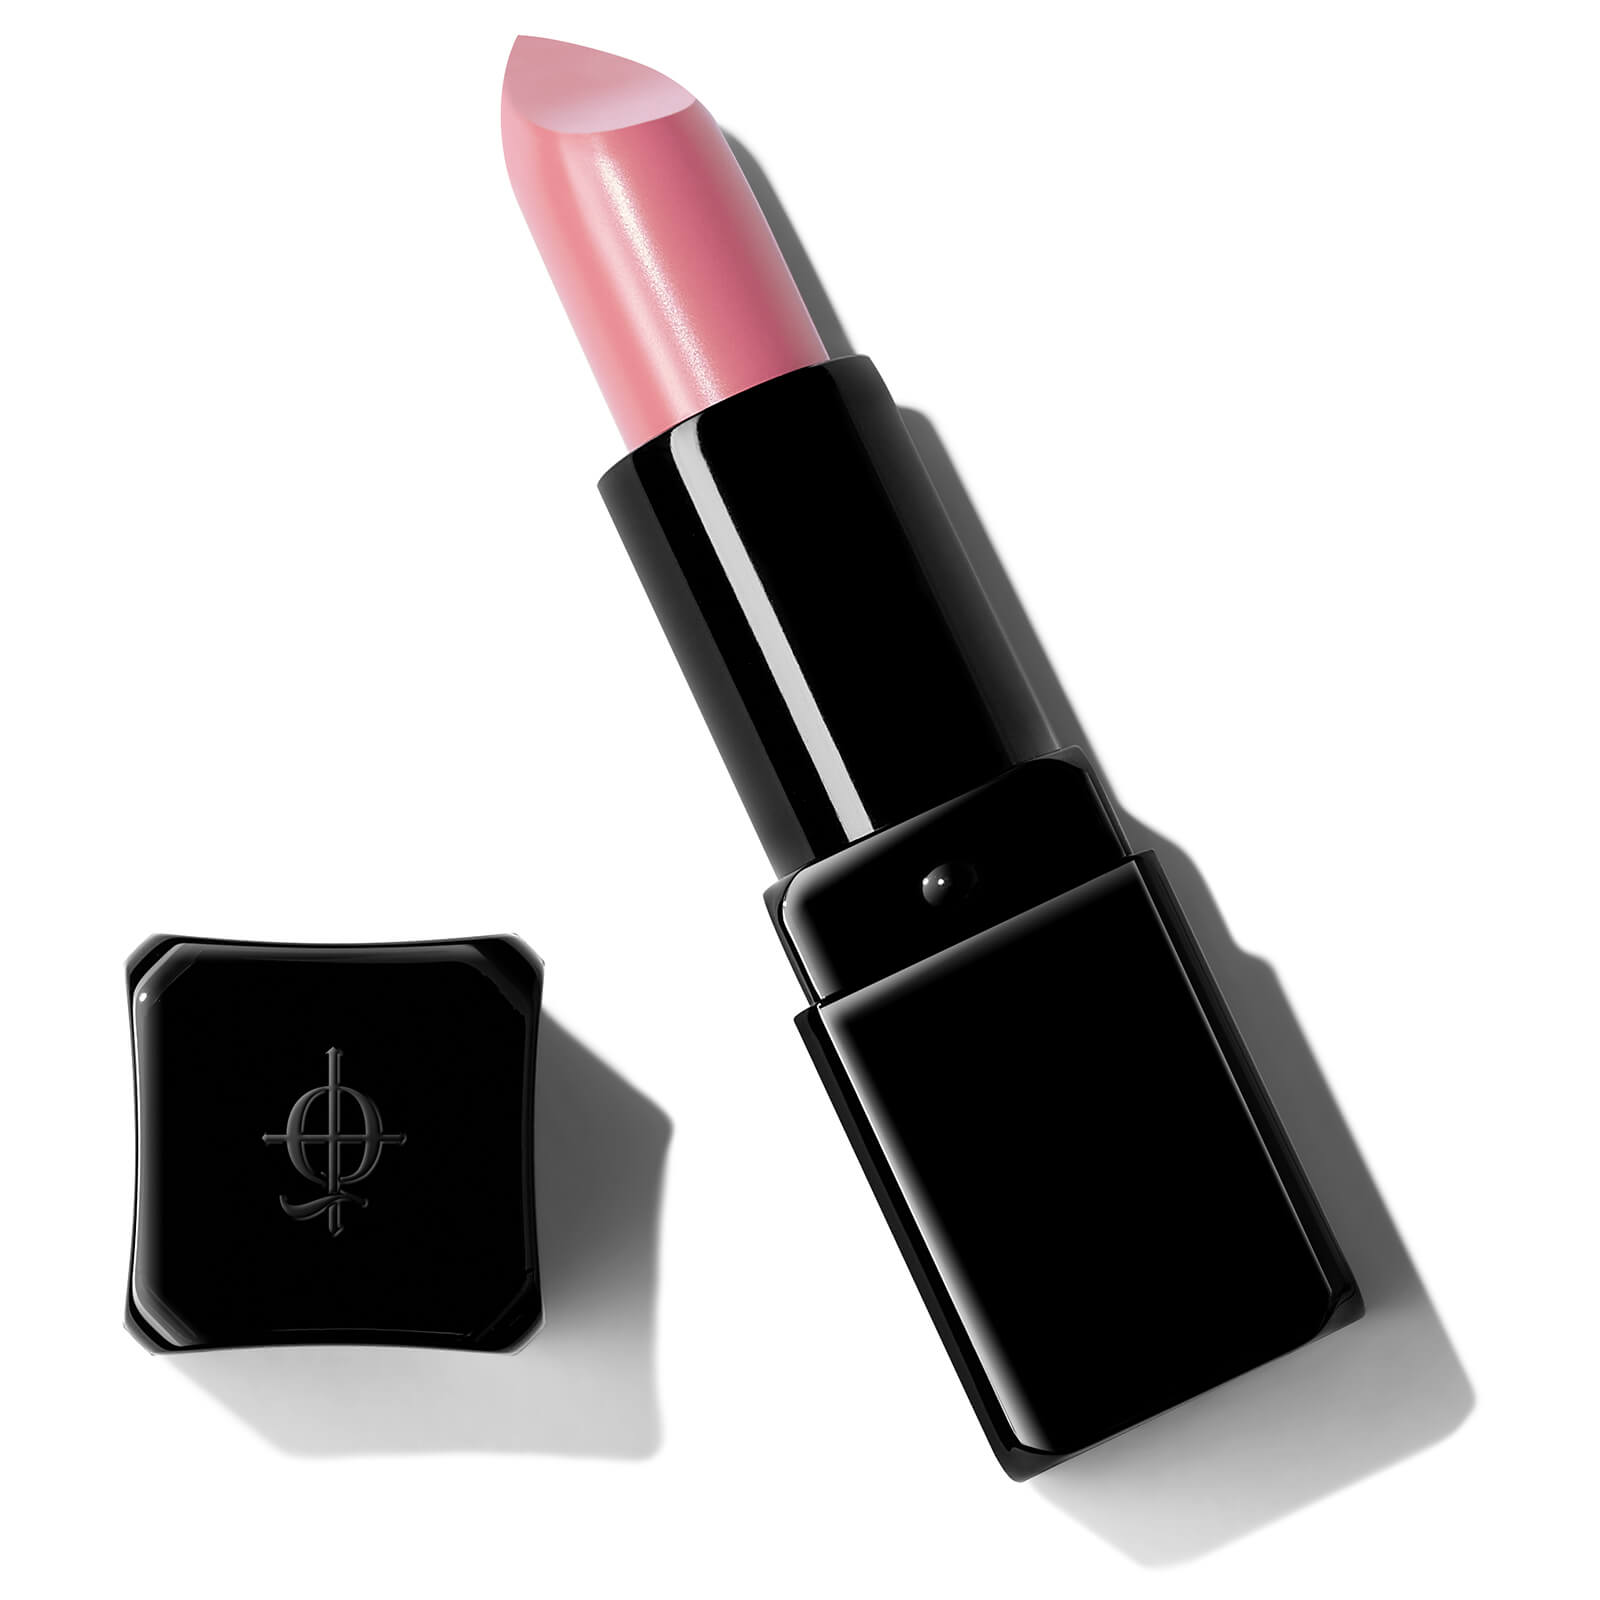 Illamasqua Sheer Veil Lipstick 4g (Various Shades) - Precious